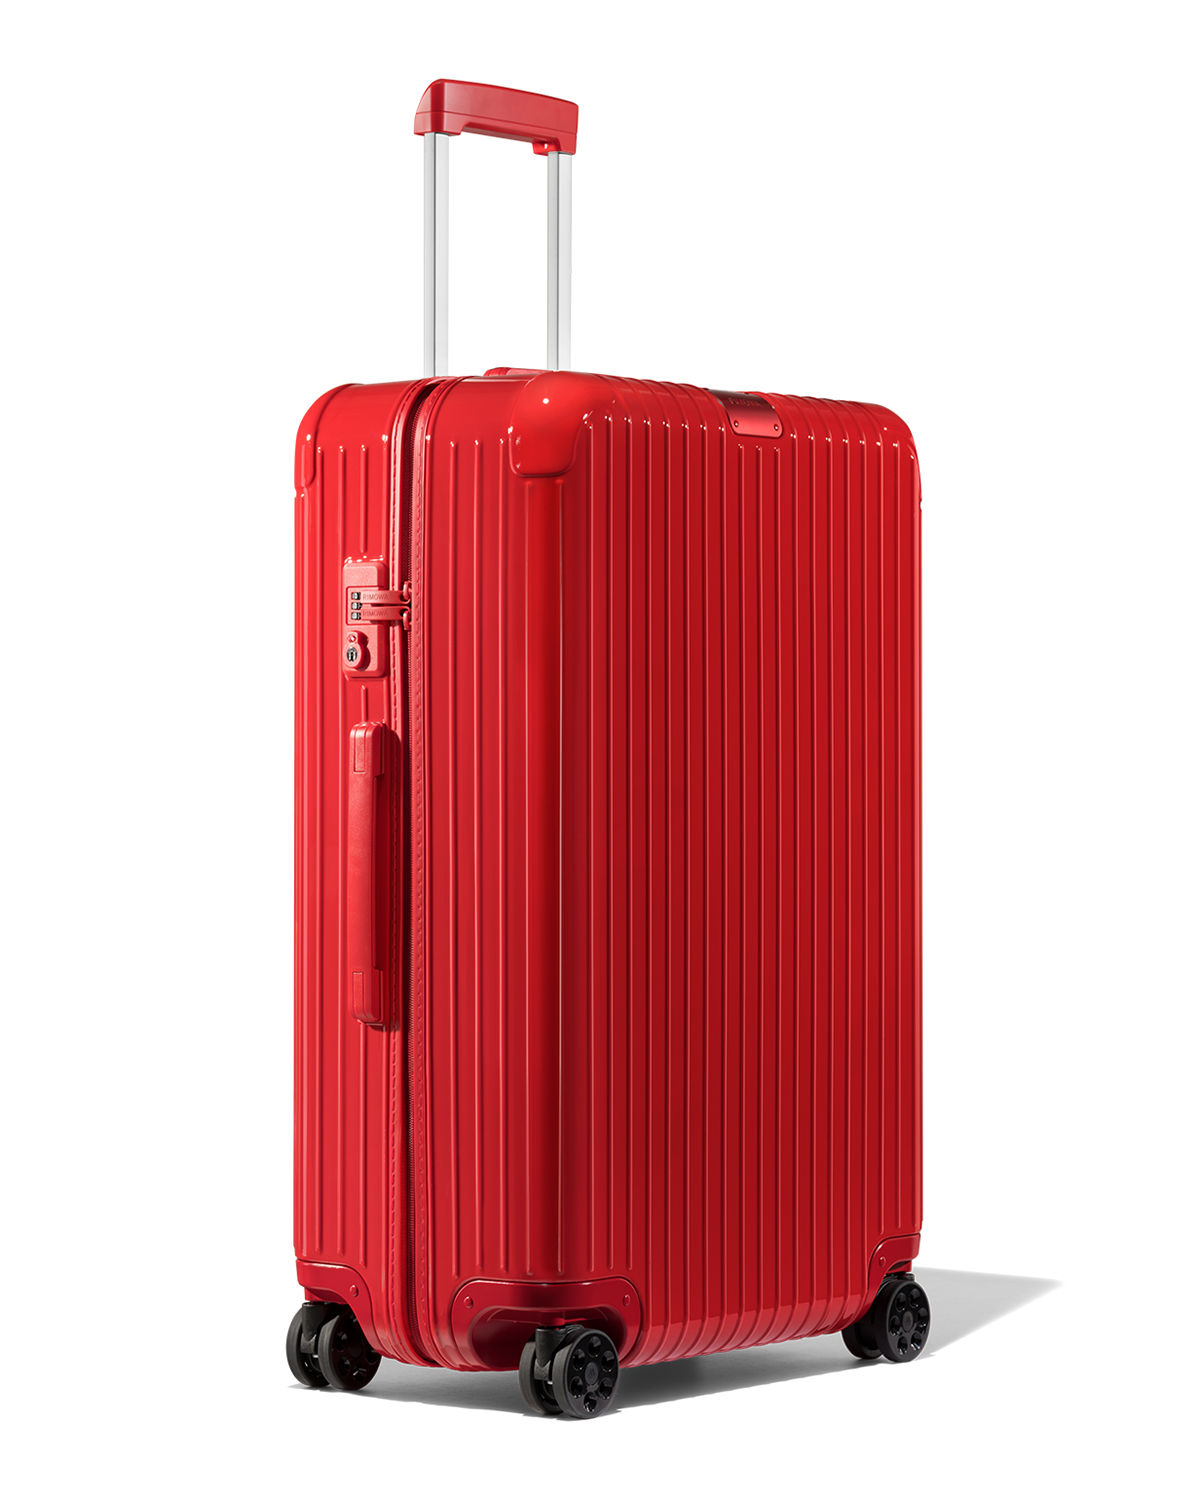 Rimowa Chic Luggage | Travel in Style - A Few Goody Gumdrops